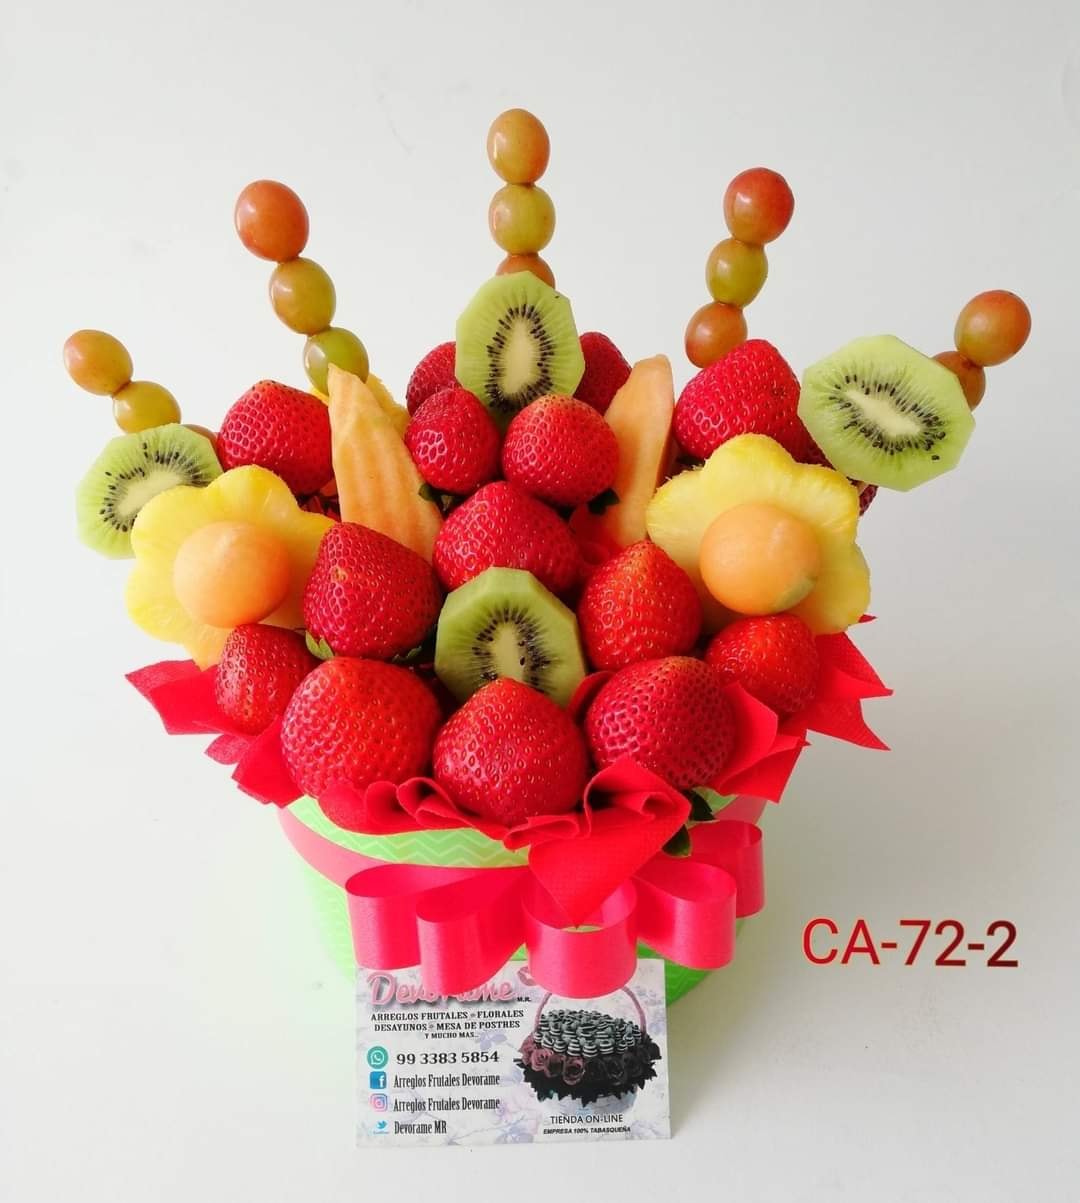 Arreglo frutal Ca-72-2 devorame